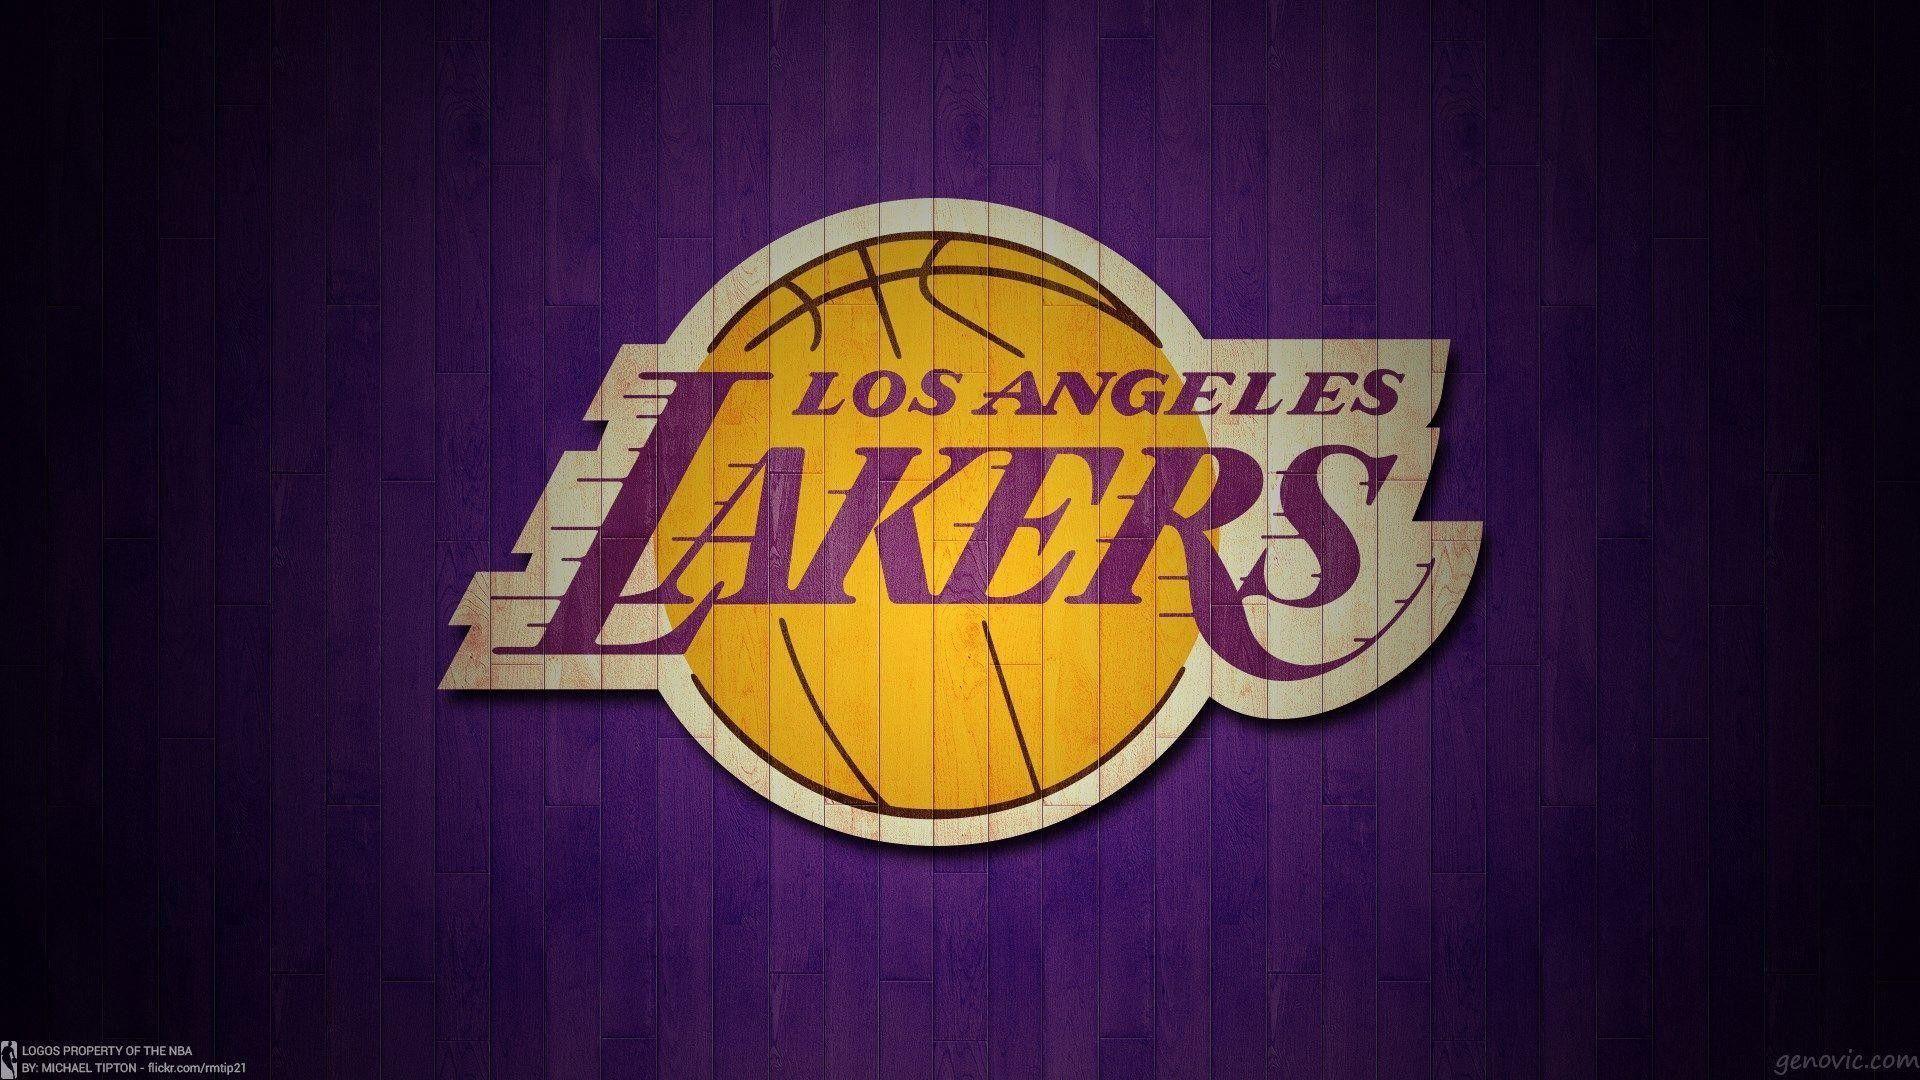 Los Angeles Lakers Wallpapers - Top